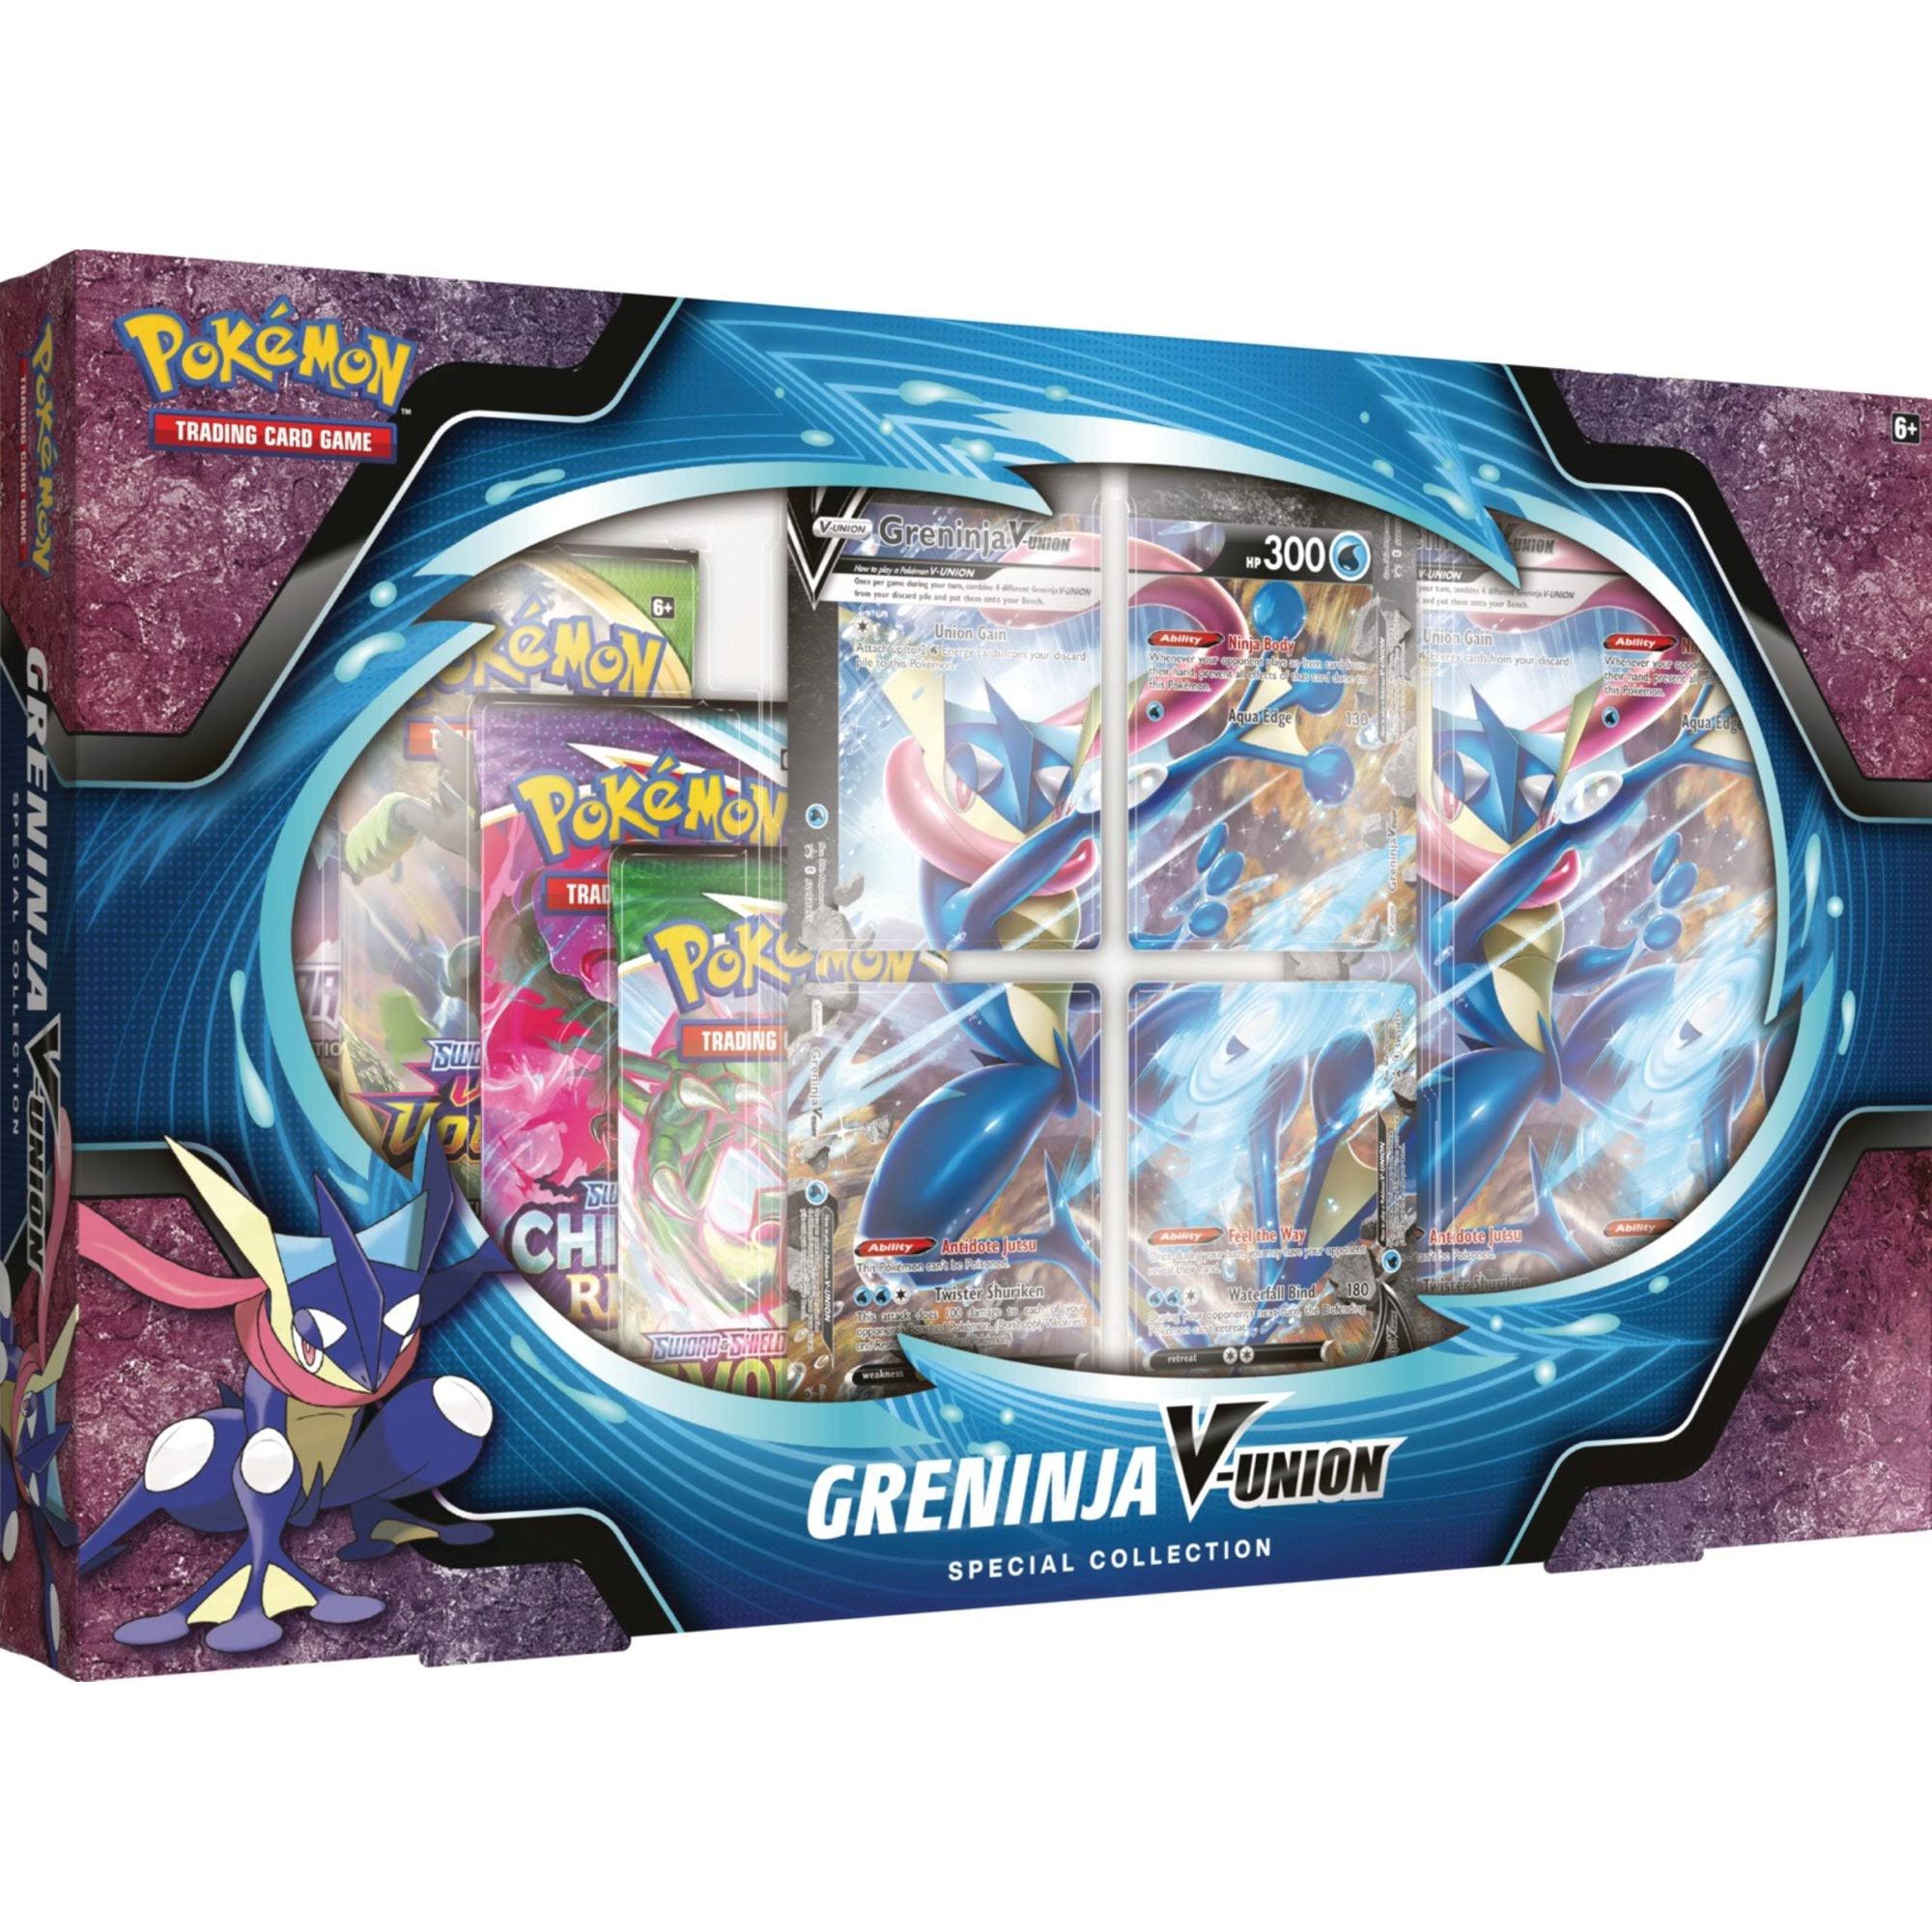 Pokémon V-Union Special Collection Greninja Box